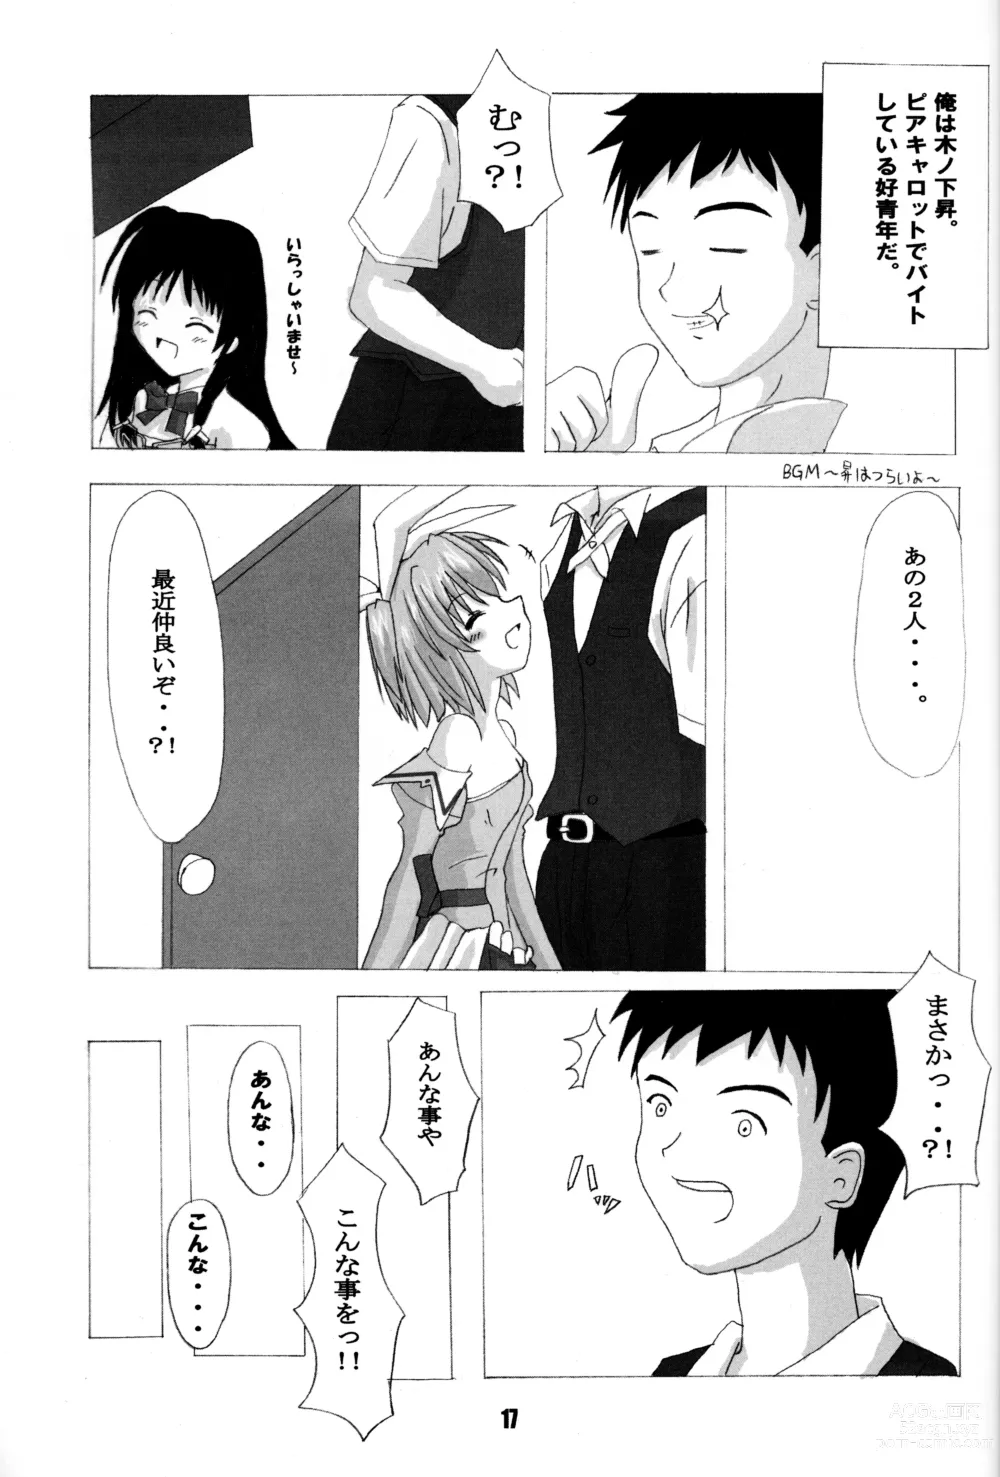 Page 16 of doujinshi Rollin 6